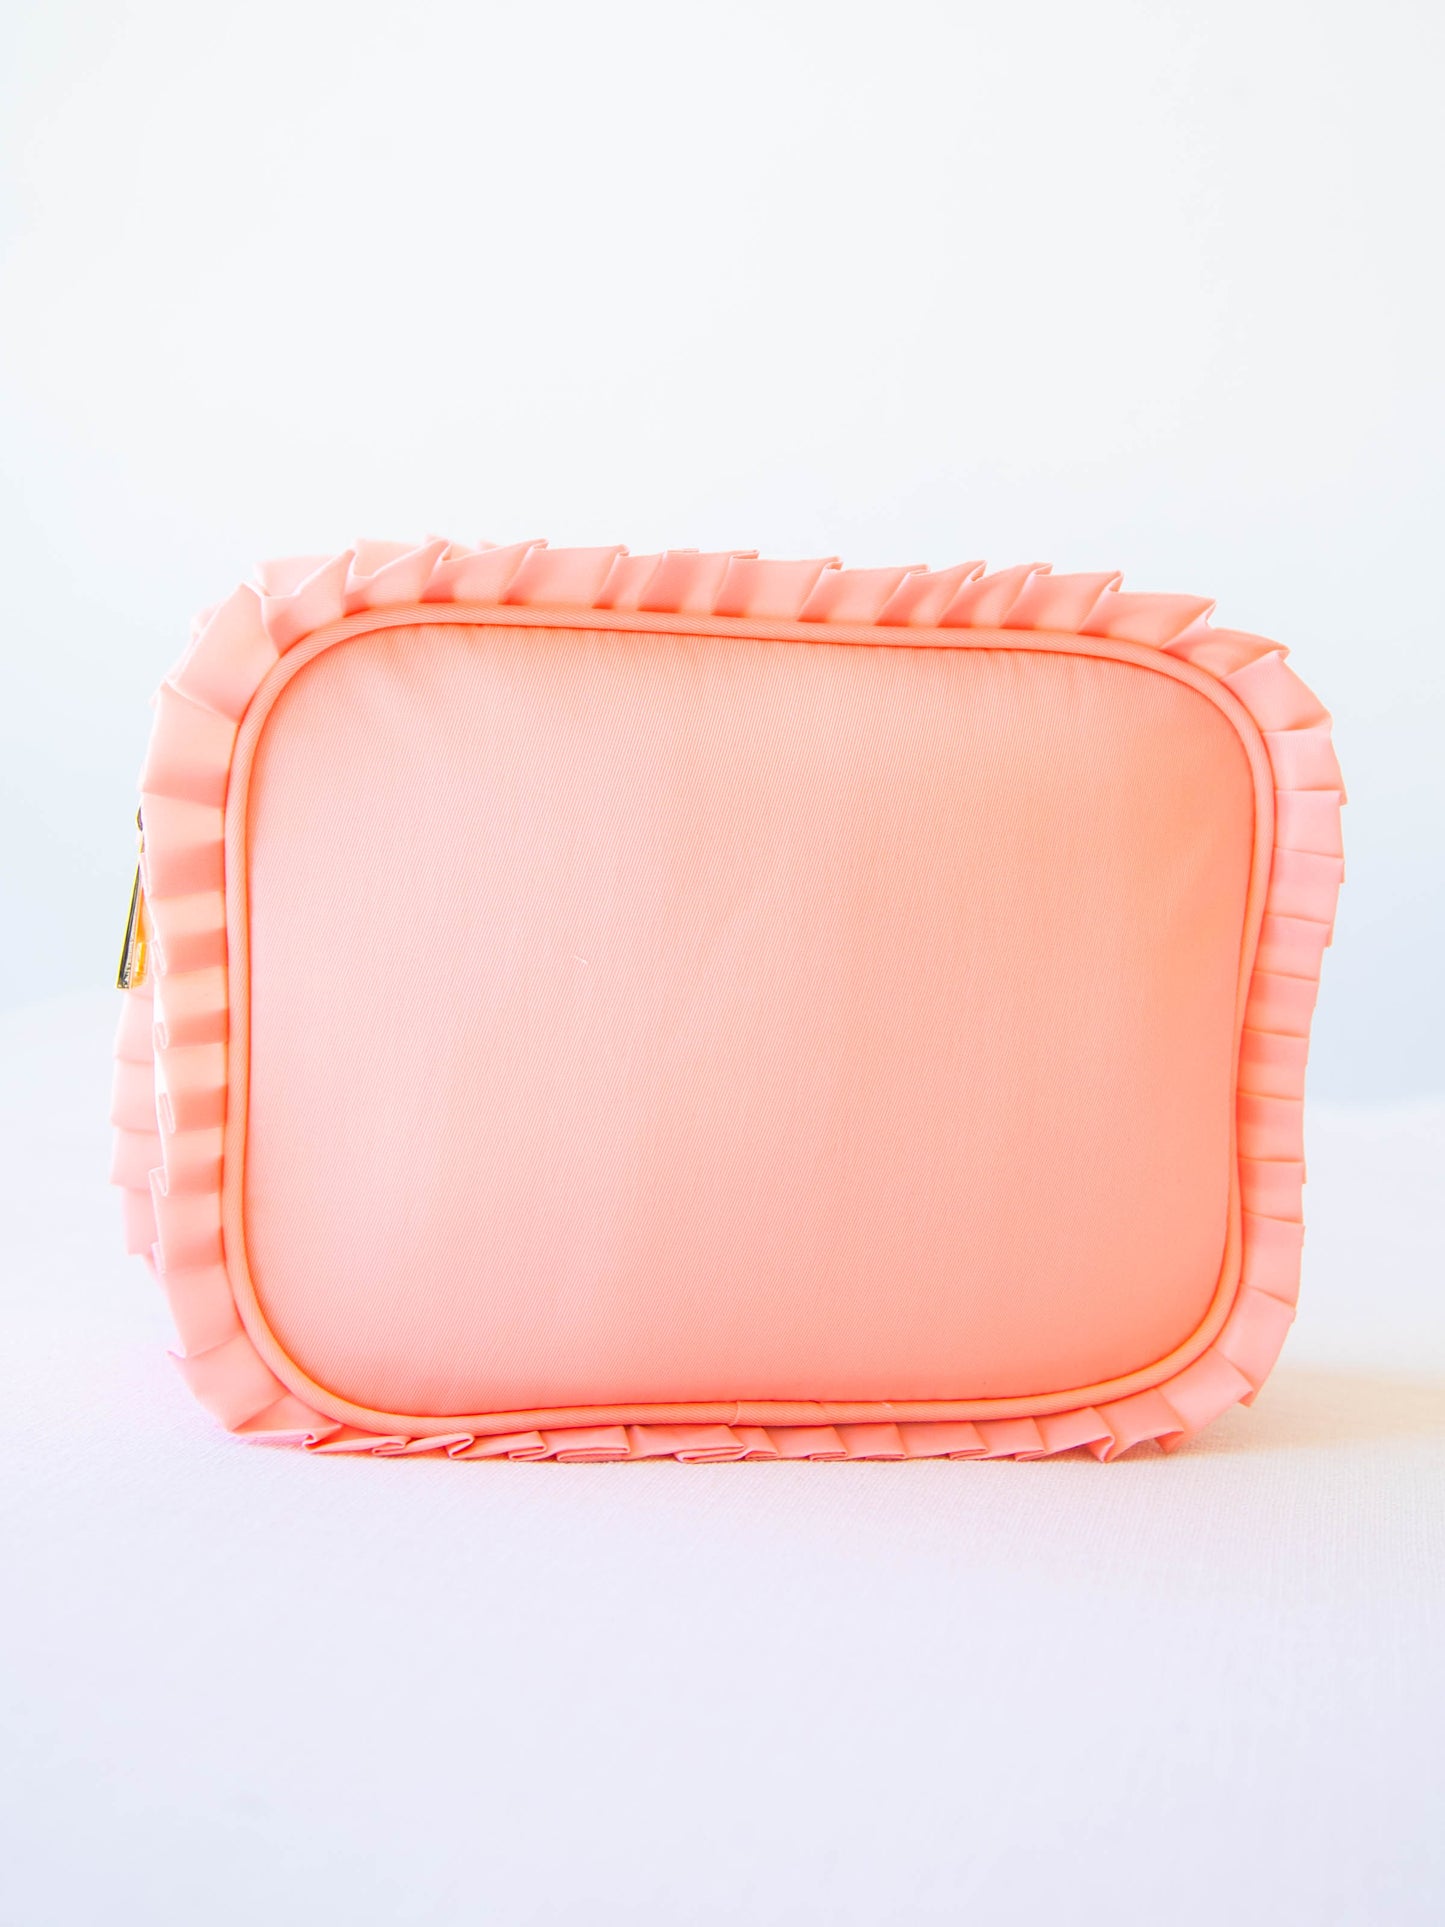 Ruffled Cosmetic Bag - Pretty in Peach